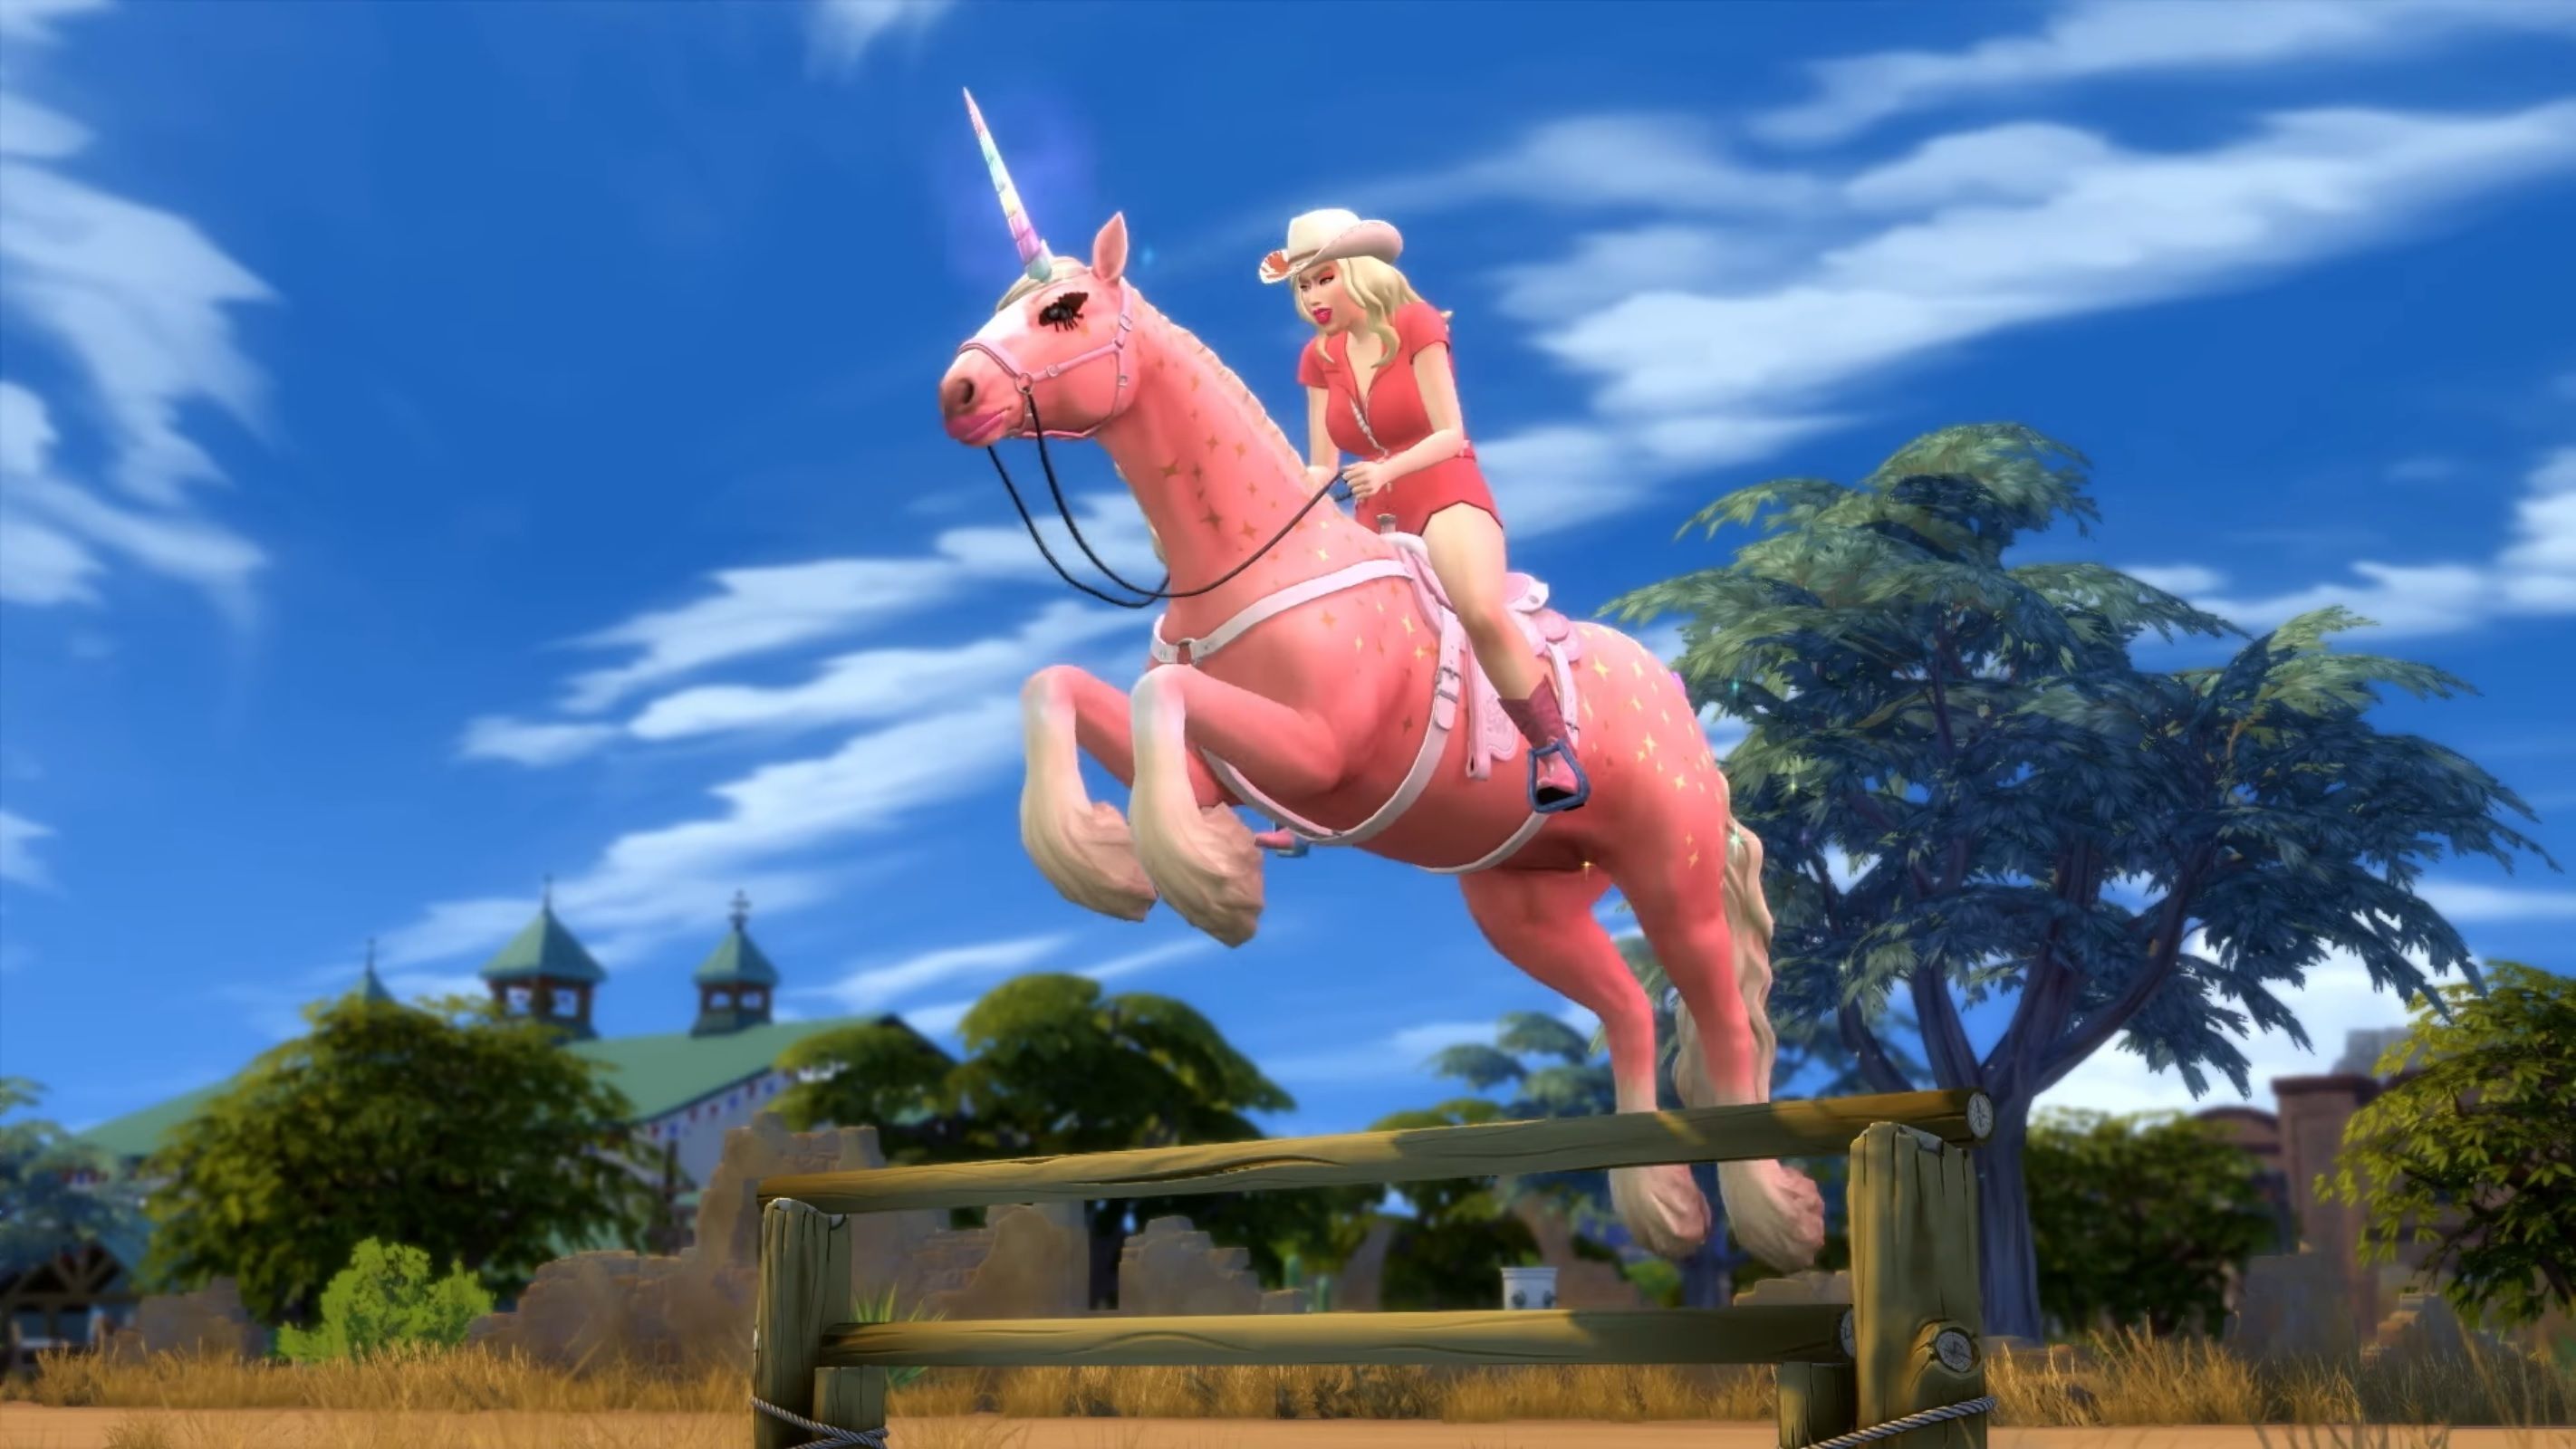 The Sims 4 - Horse Ranch DLC Origin CD Key